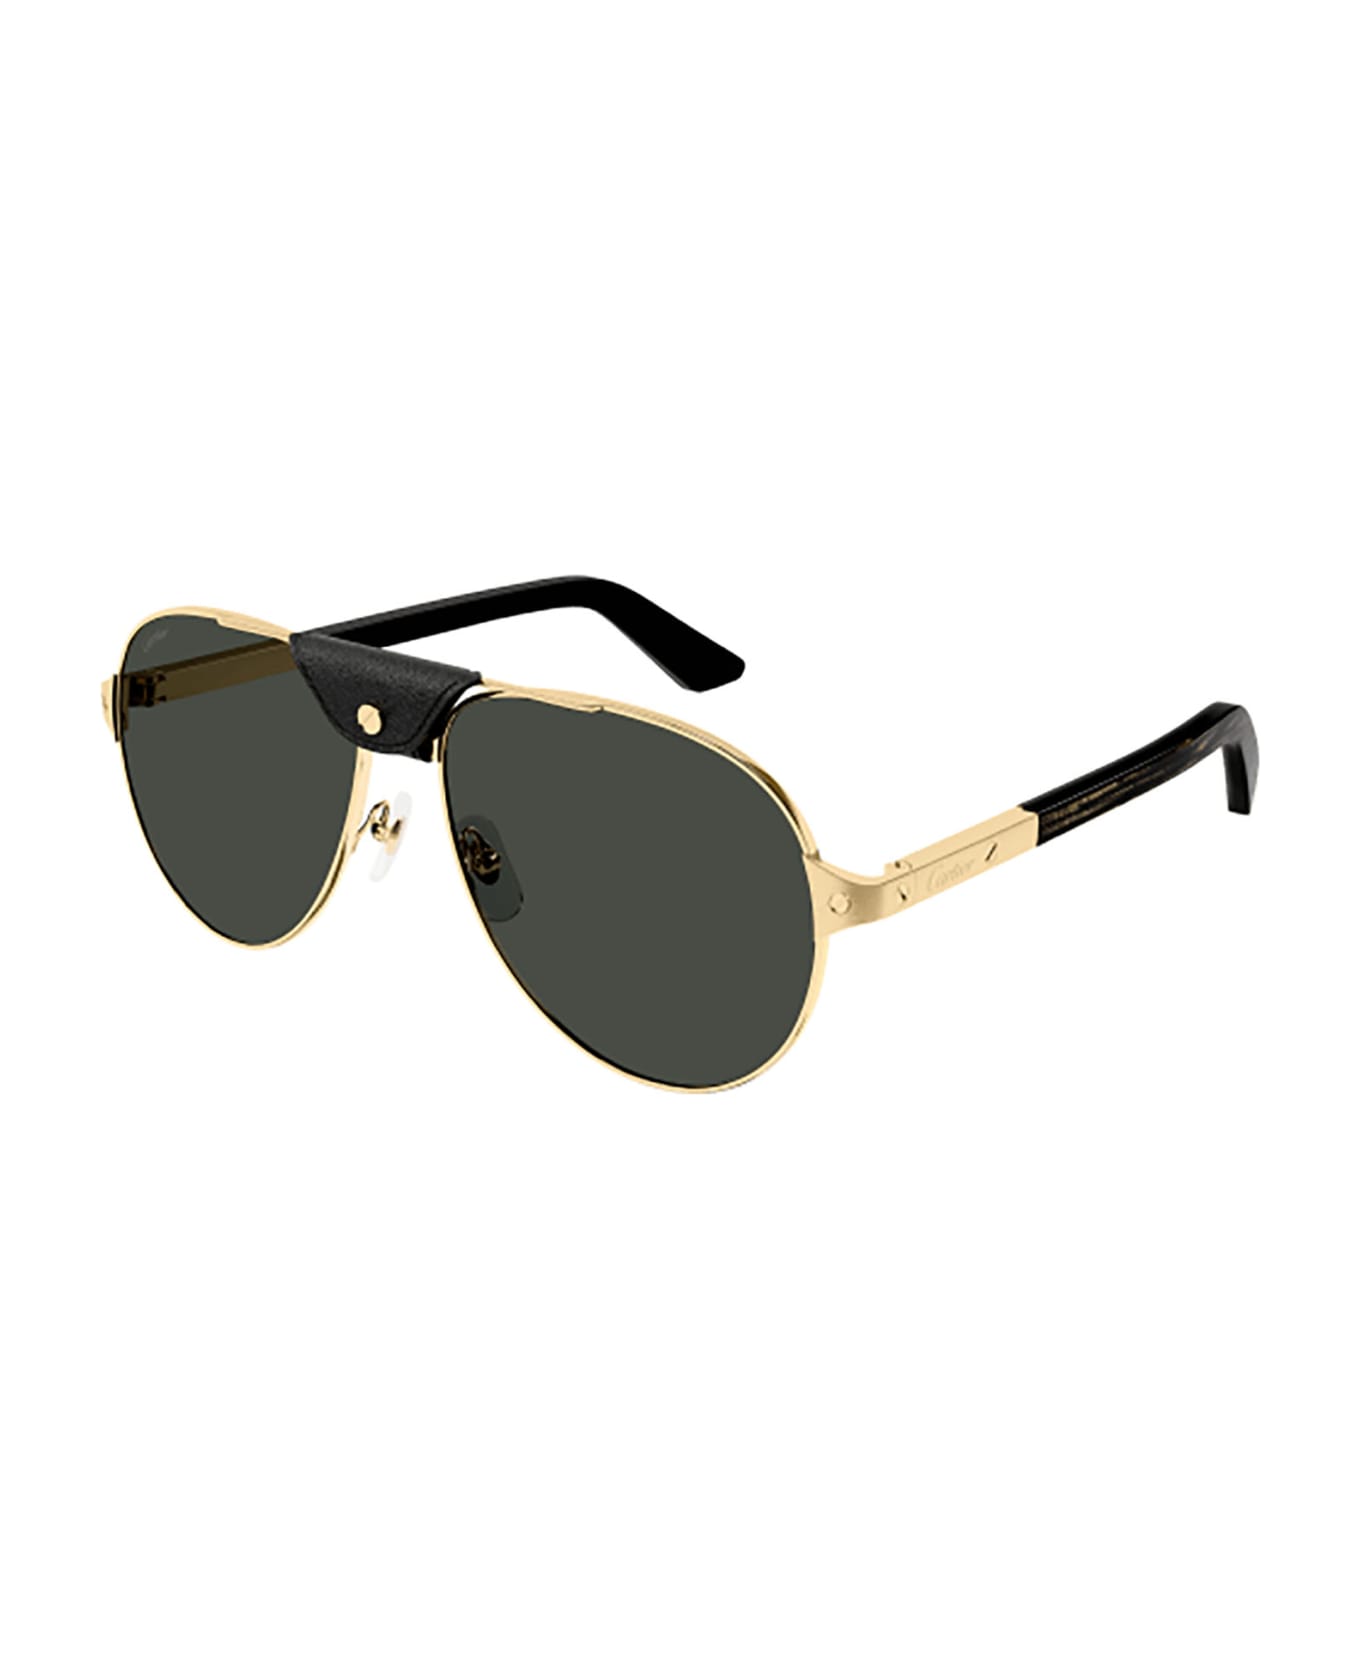 Cartier Eyewear Ct0387s Sunglasses - 001 GOLD GOLD GREY